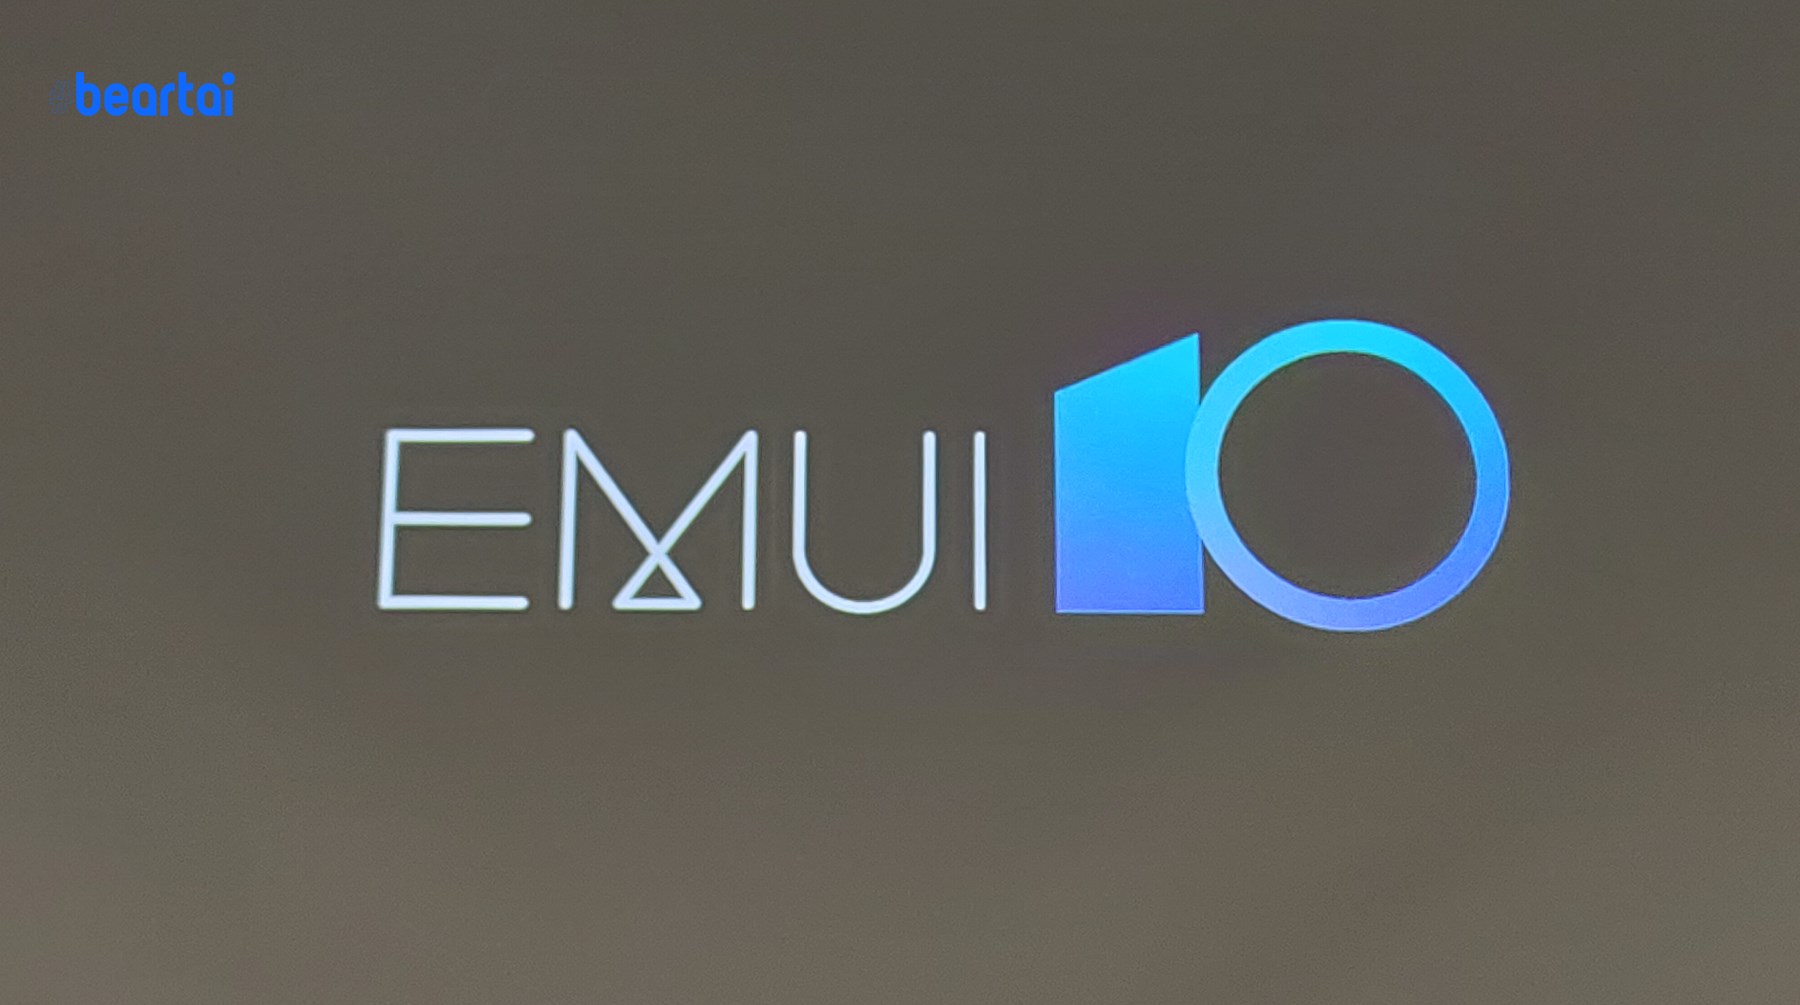 Huawei เผย HarmonyOS พร้อมโชว์ศักยภาพซอฟต์แวร์ EMUI10 ตัวล่าสุด